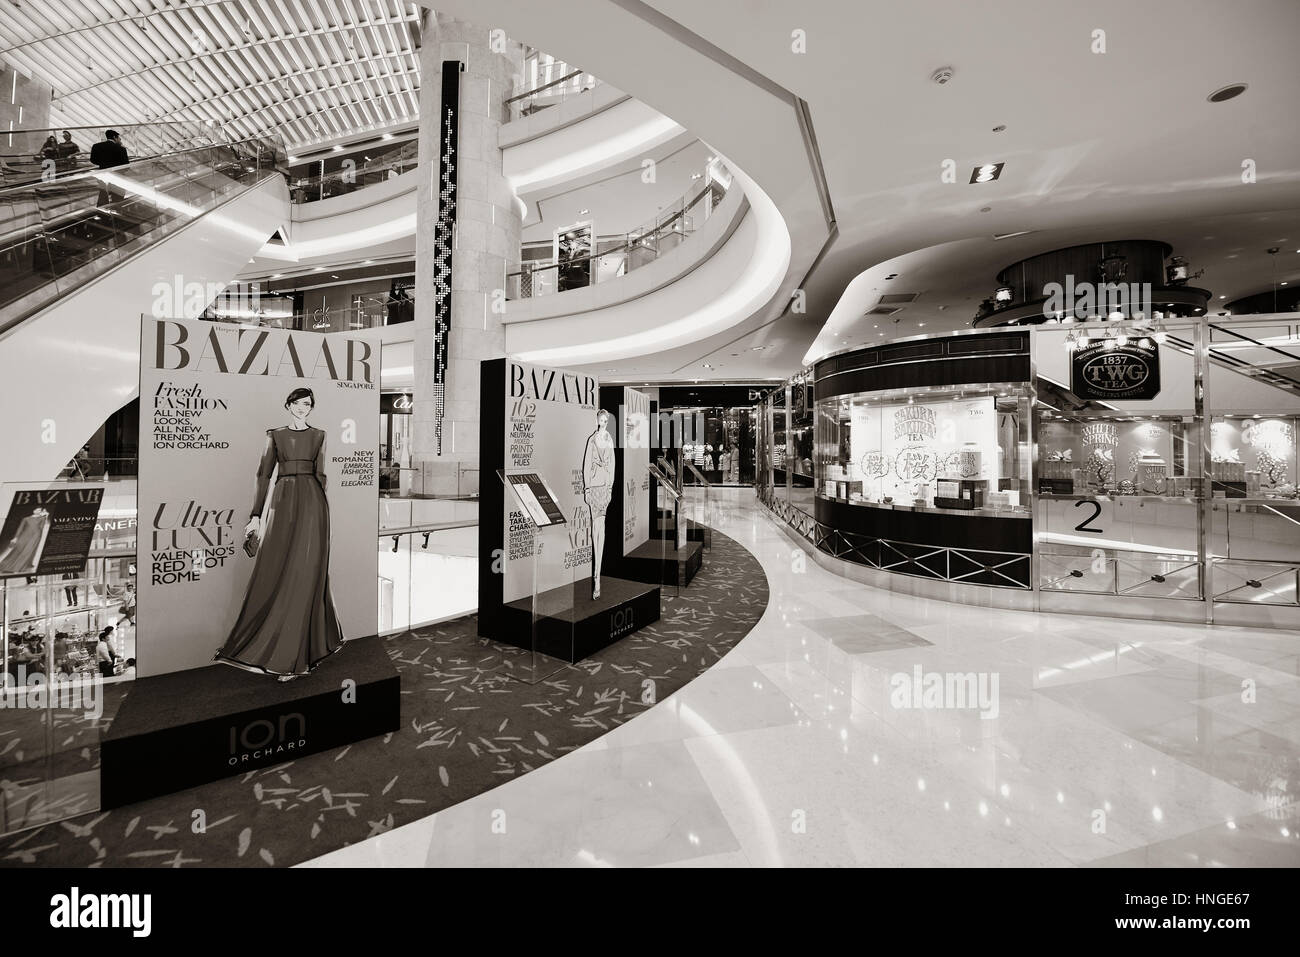 GALA MALL Shanghai  Shopping mall design, Mall design, Shopping malls